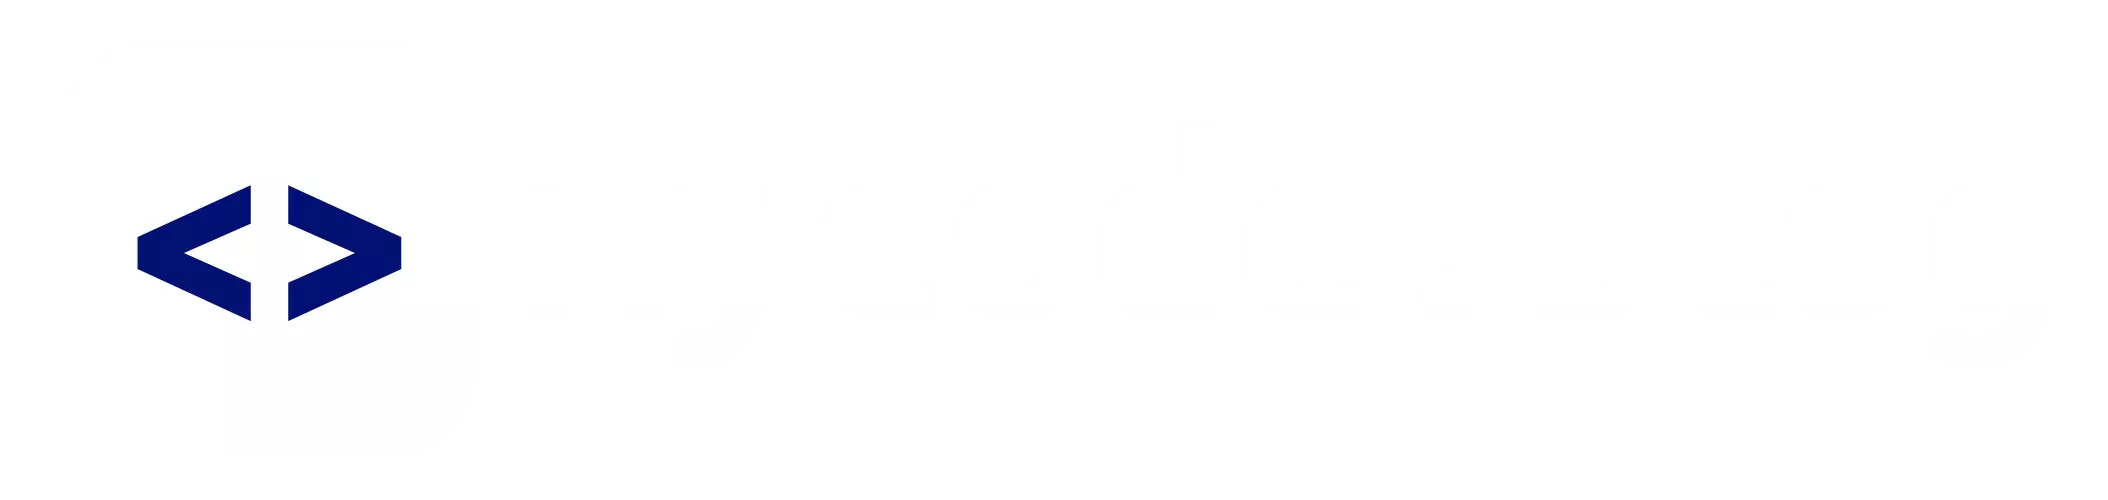 Mycode.blog website logo